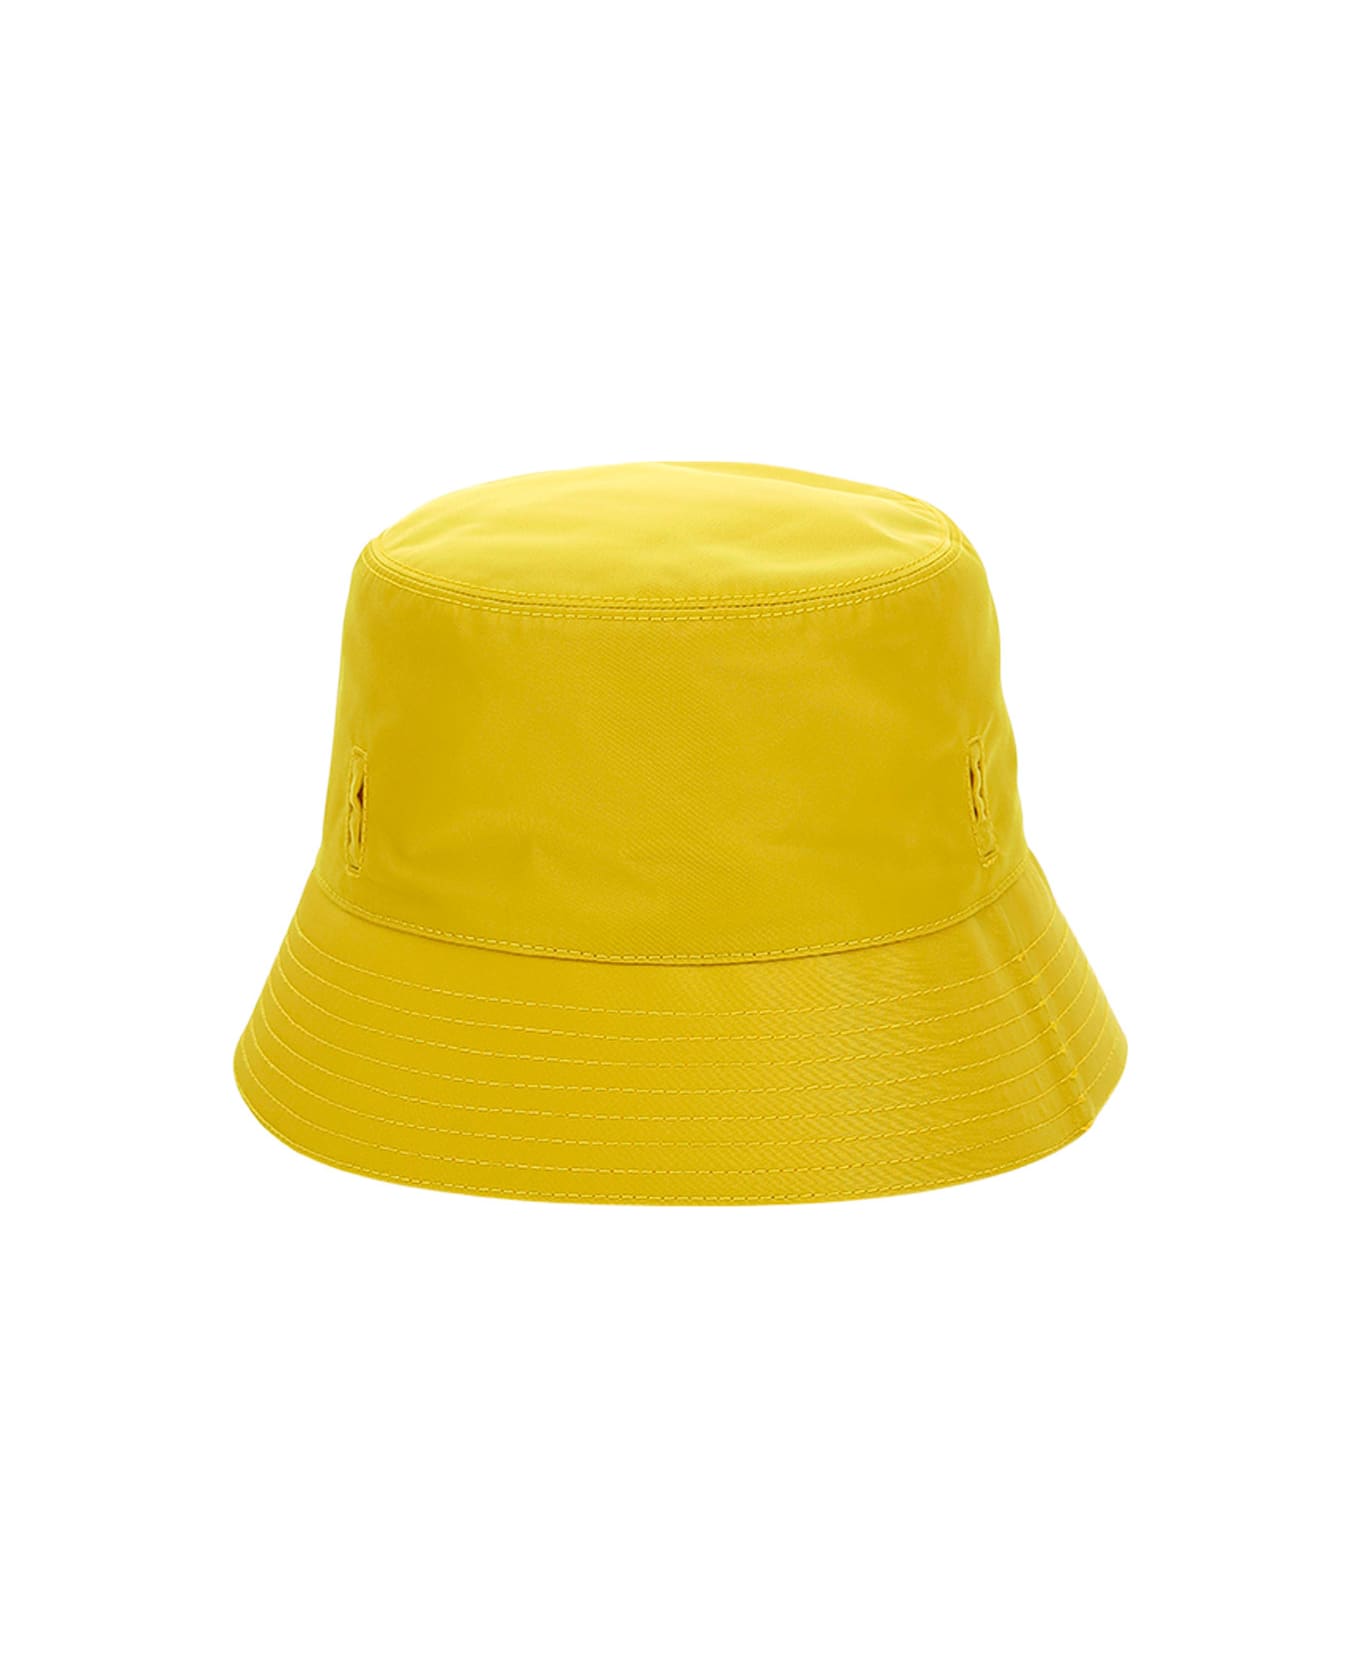 Prada Bucket Hat - Giallo